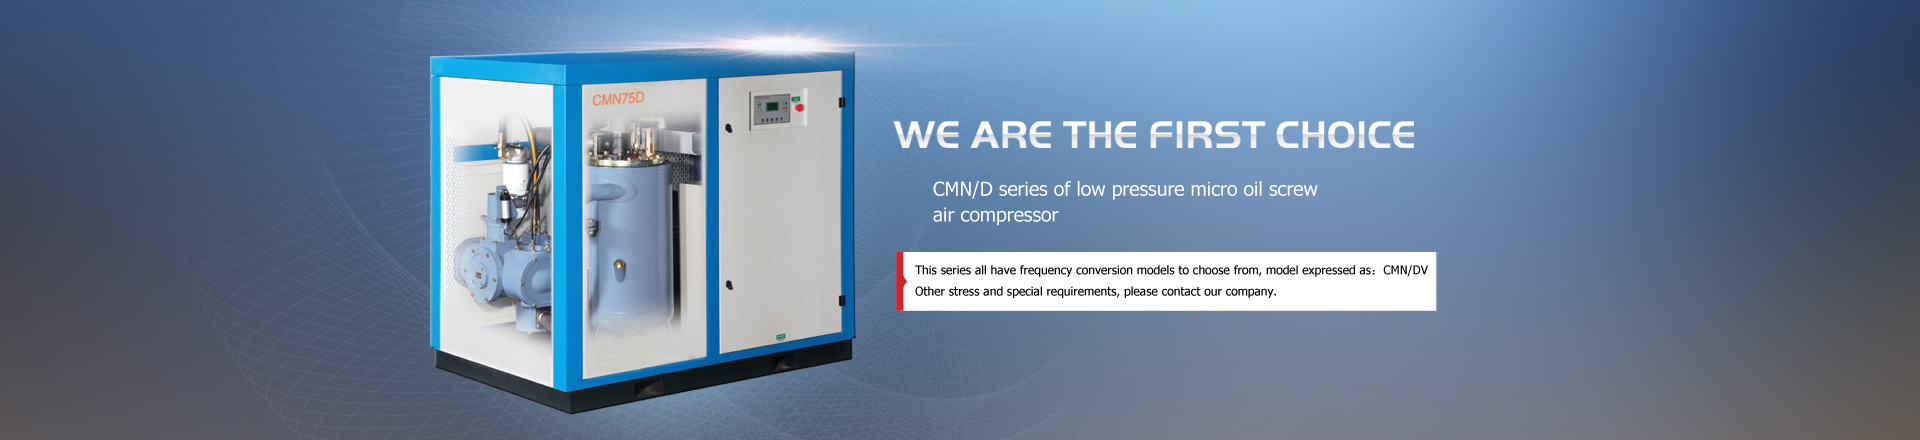 CMN/D series low pressure micro-oil screw air compressor